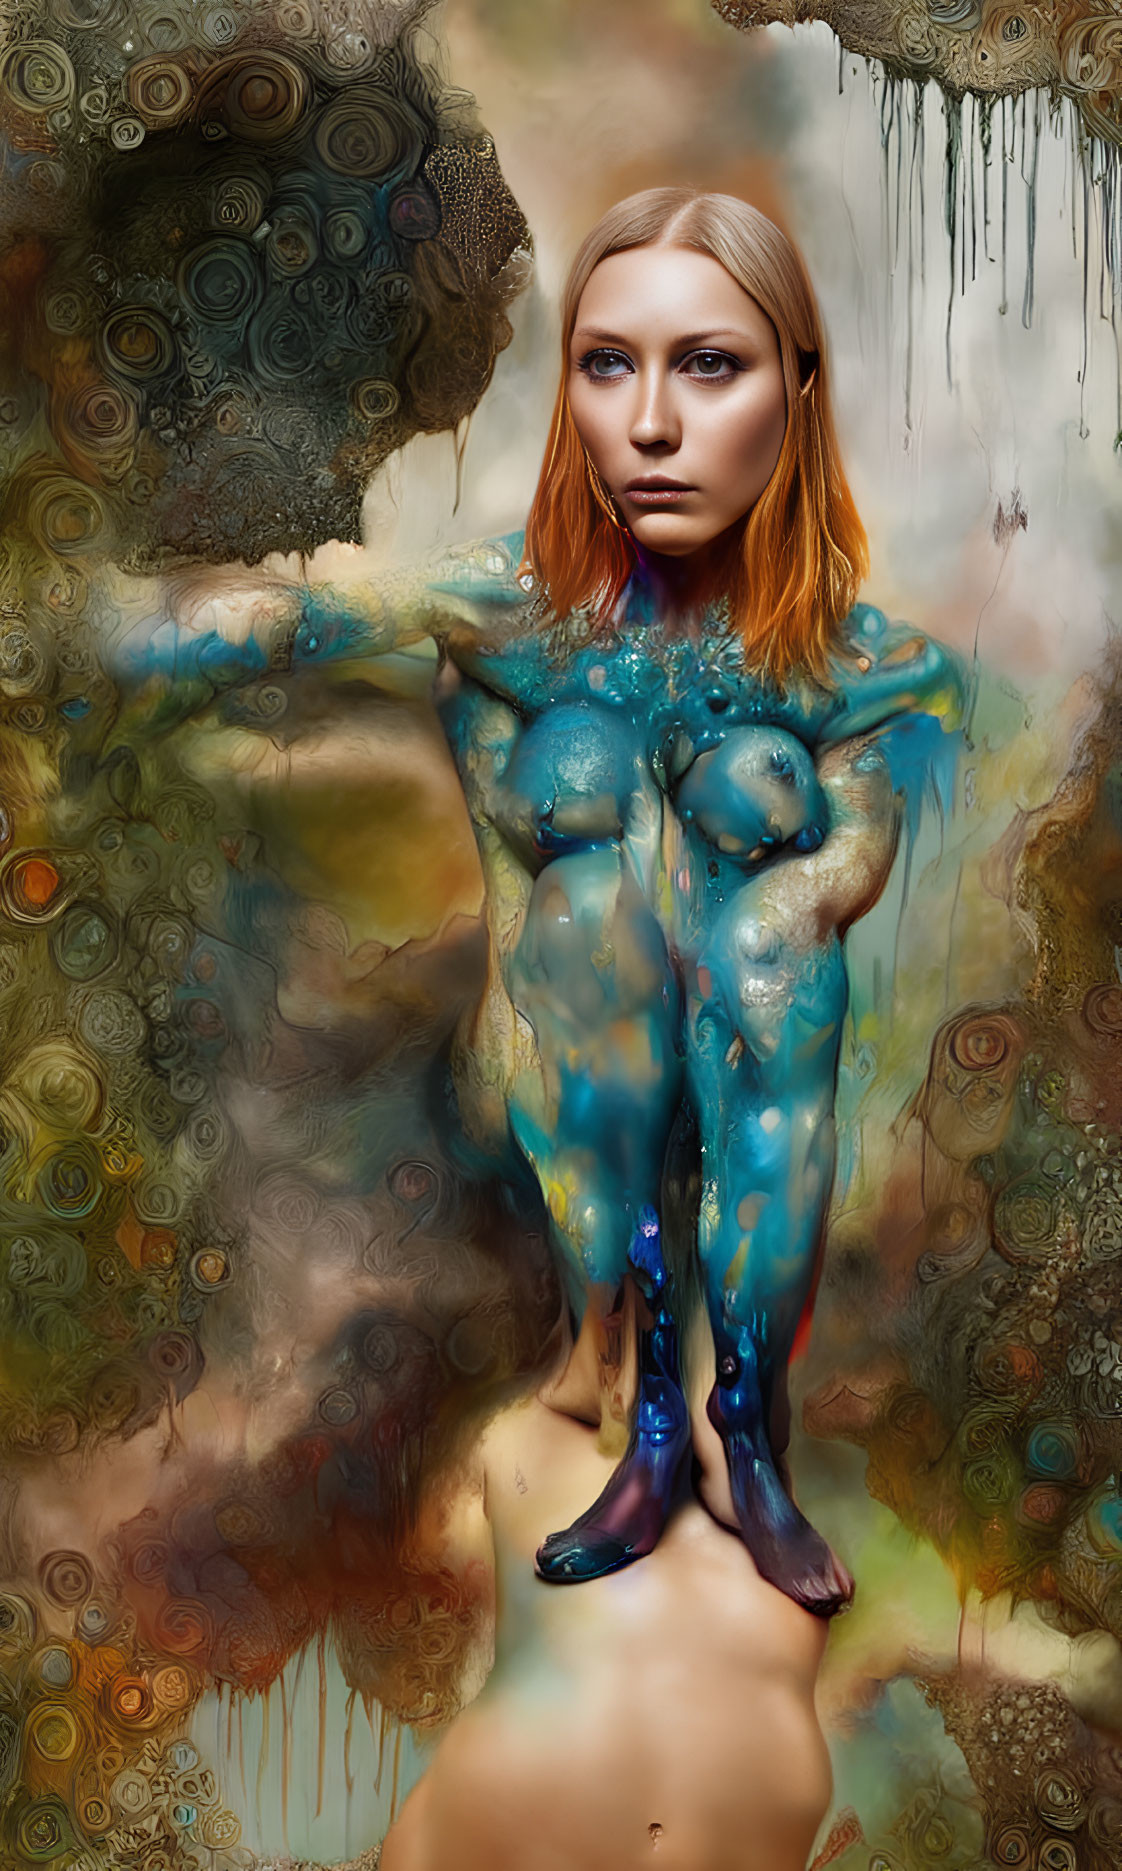 Vivid Blue and Bronze Body Paint on Surreal Portrait